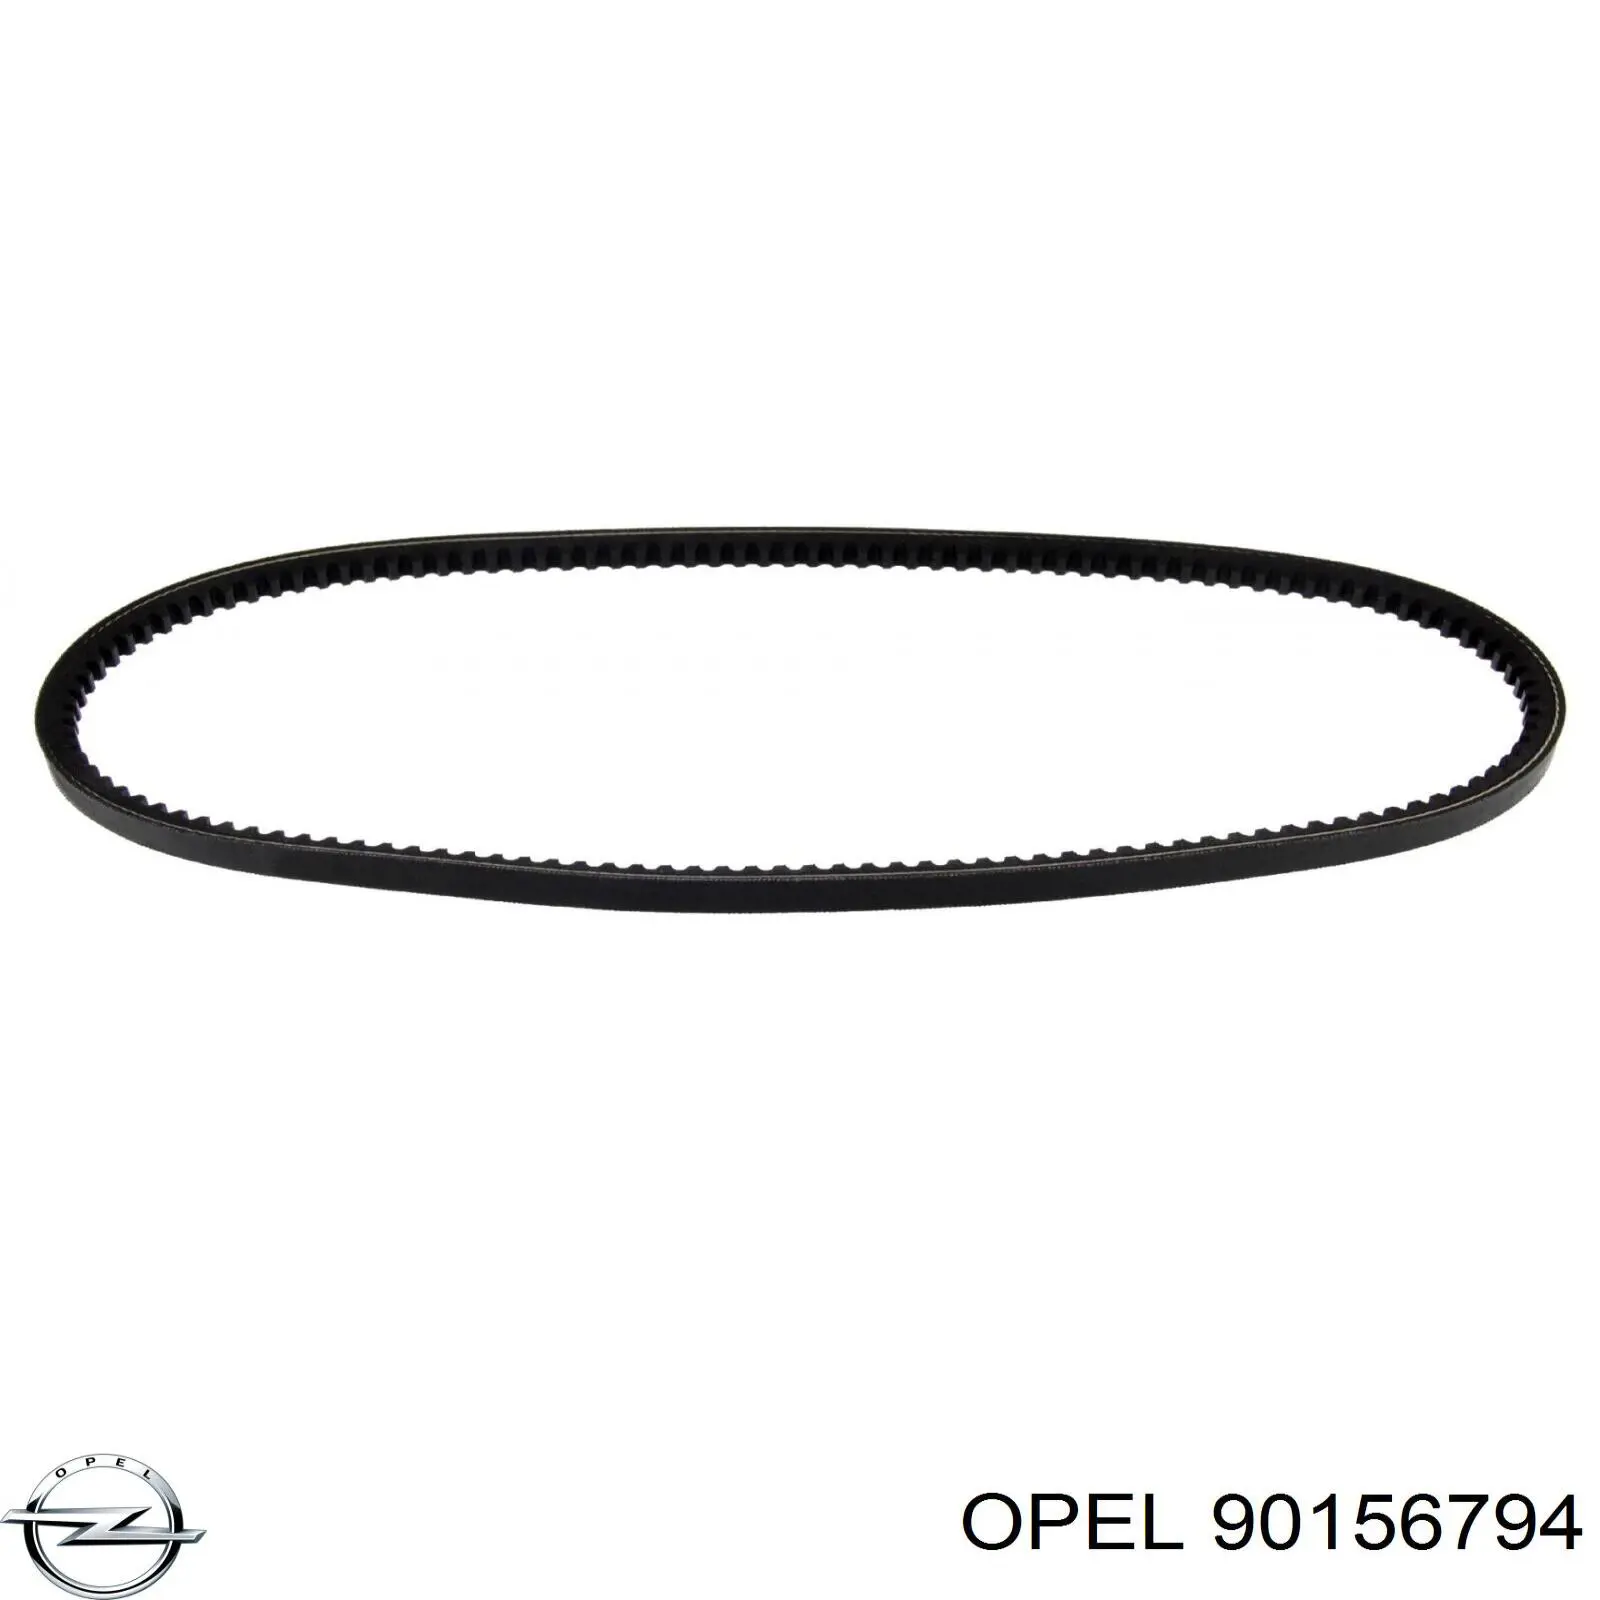 90156794 Opel correa trapezoidal